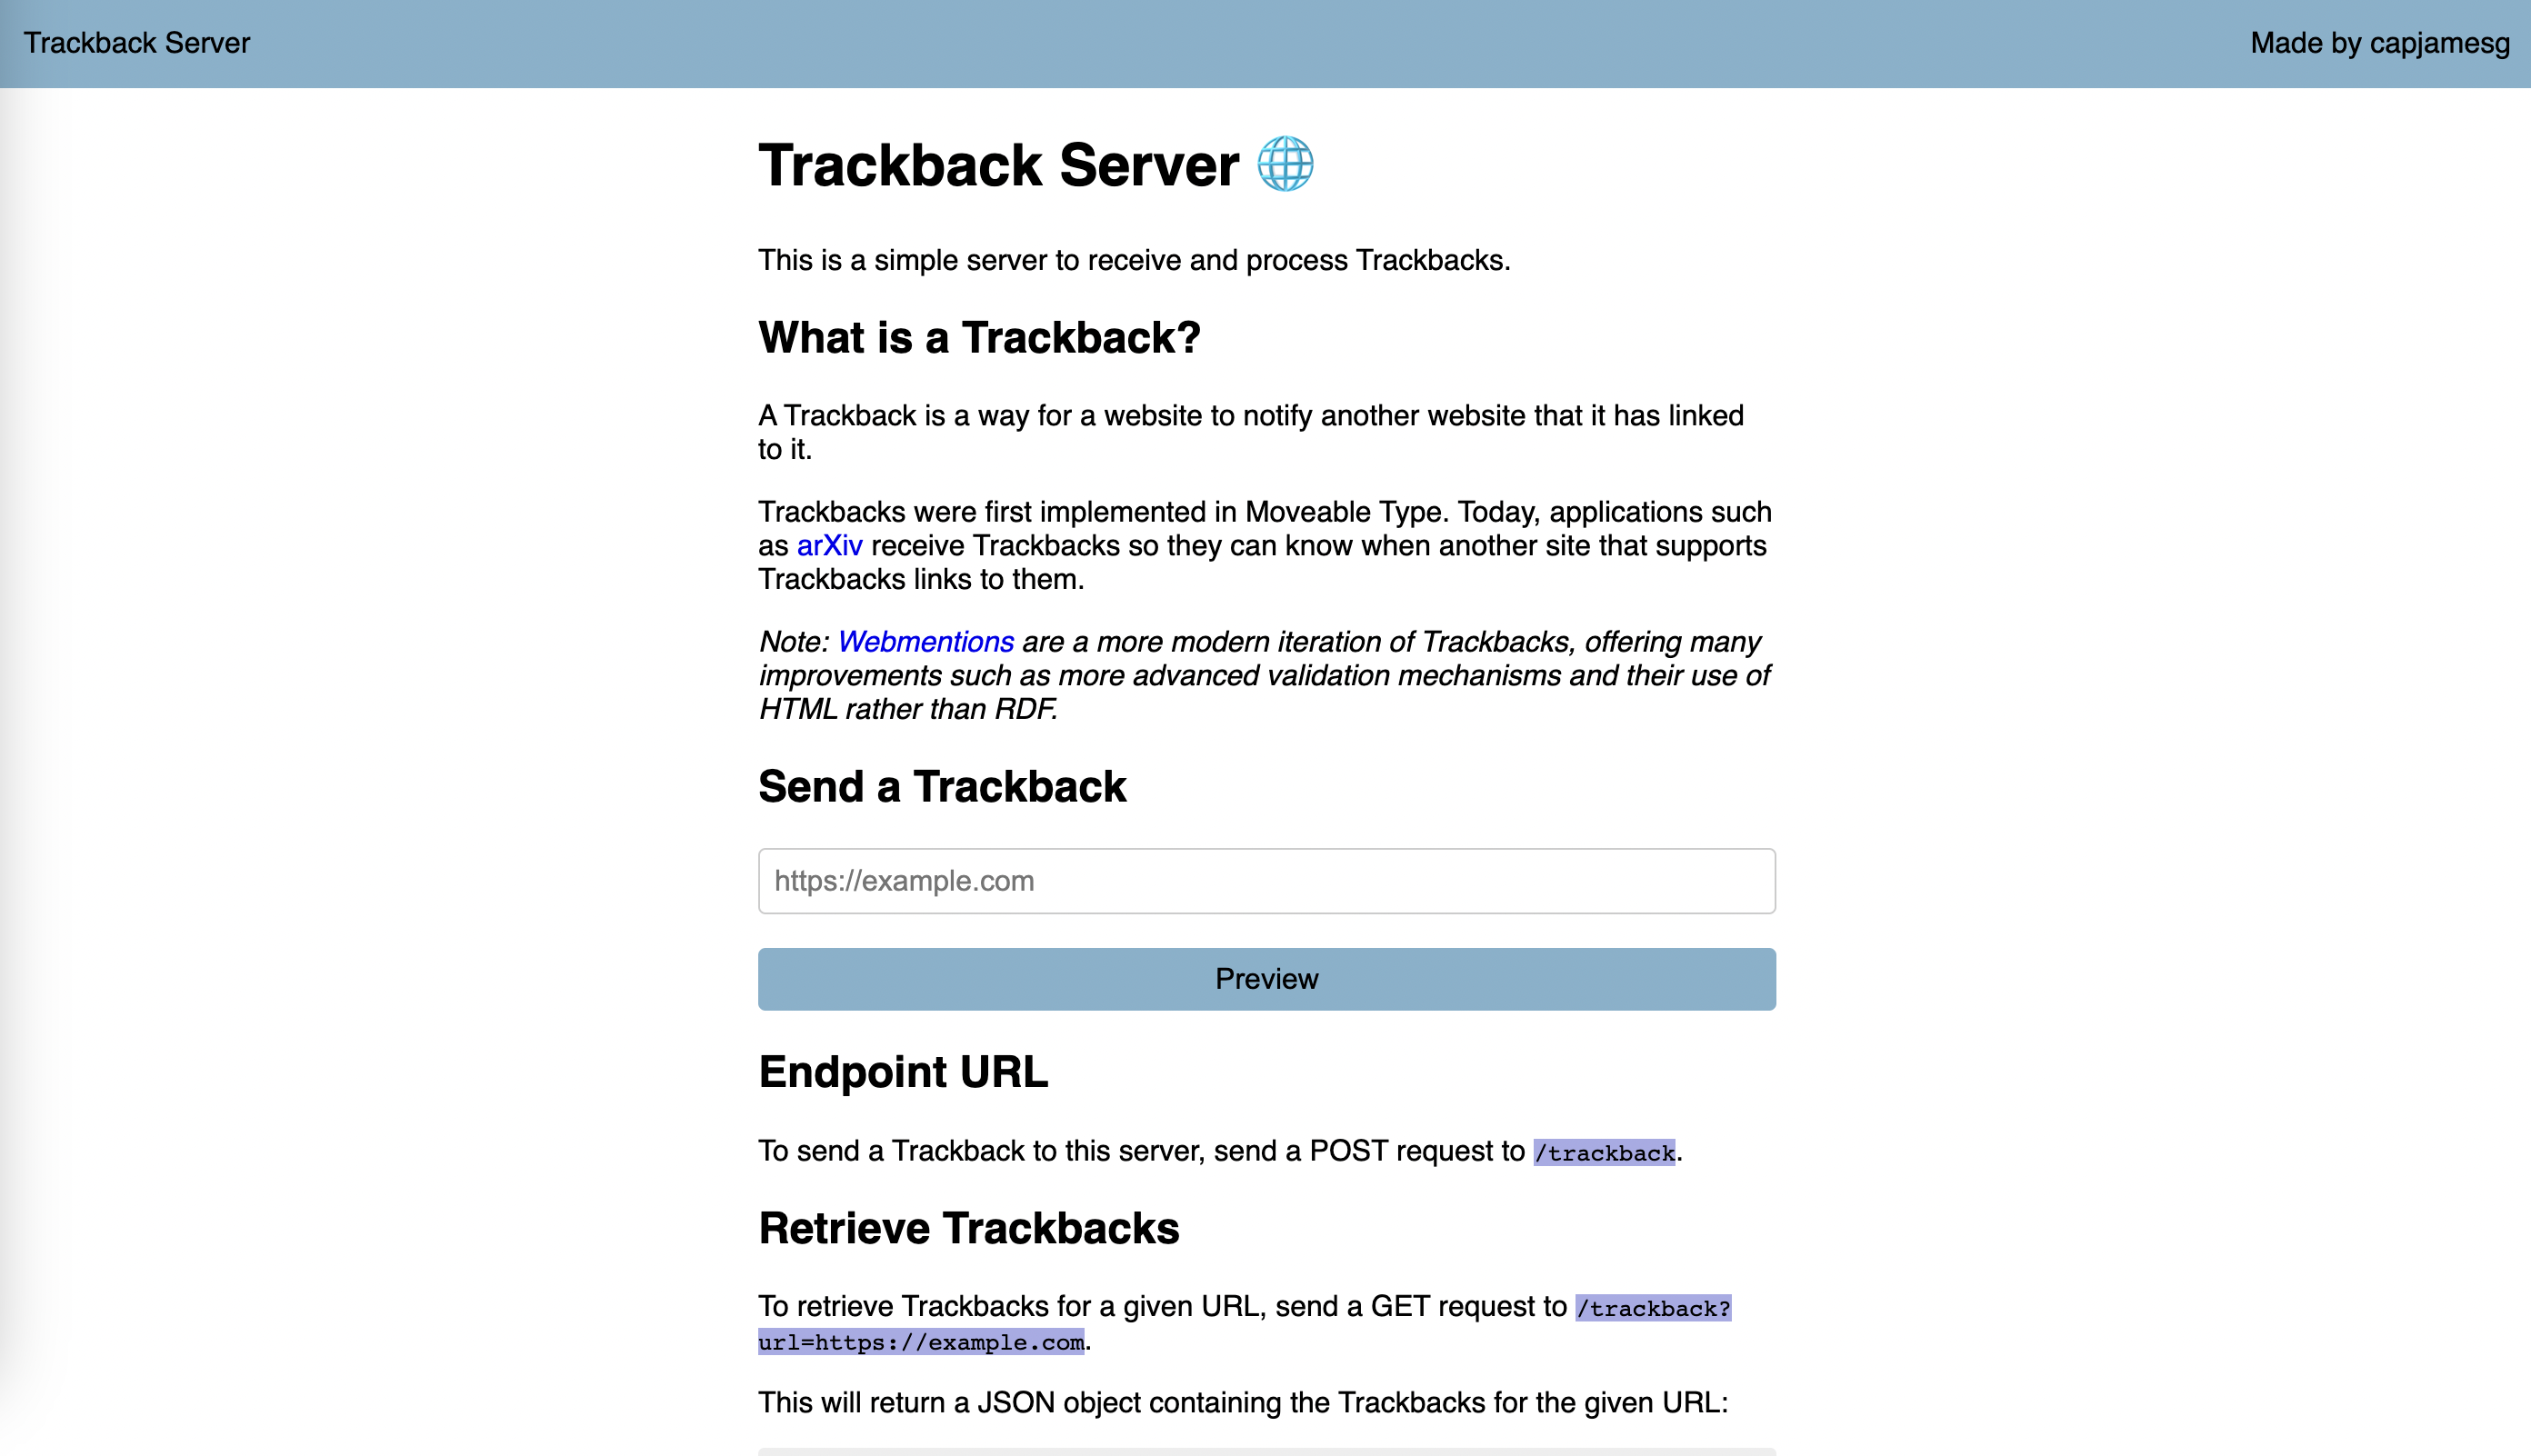 Screenshot of the Trackback Server